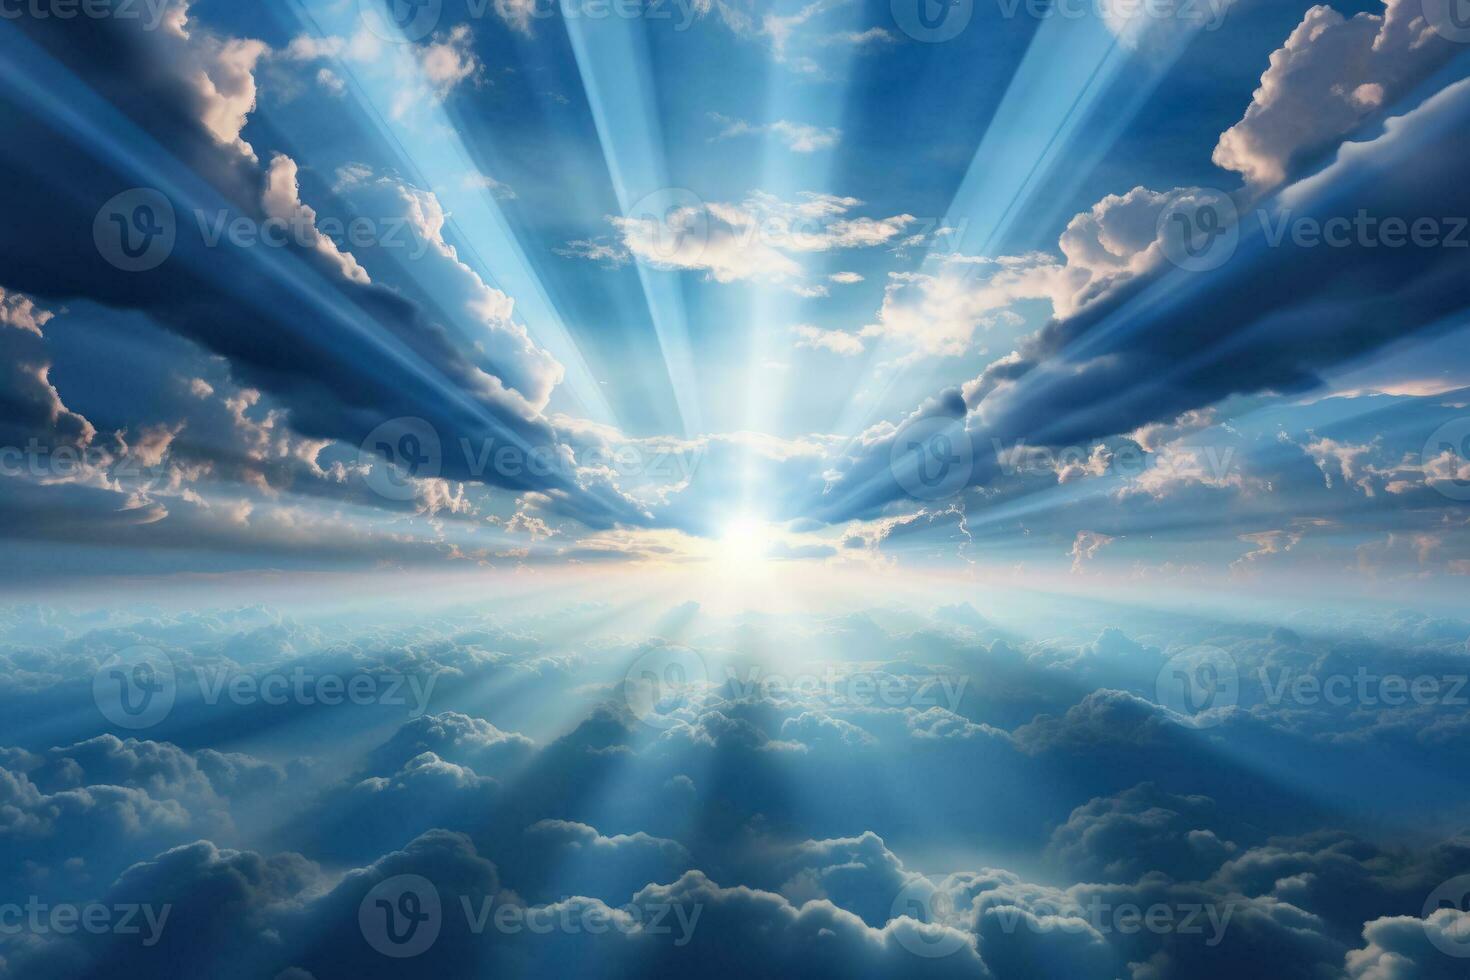 Divine rays pierce through cloudy veil revealing serene heavenly panorama photo